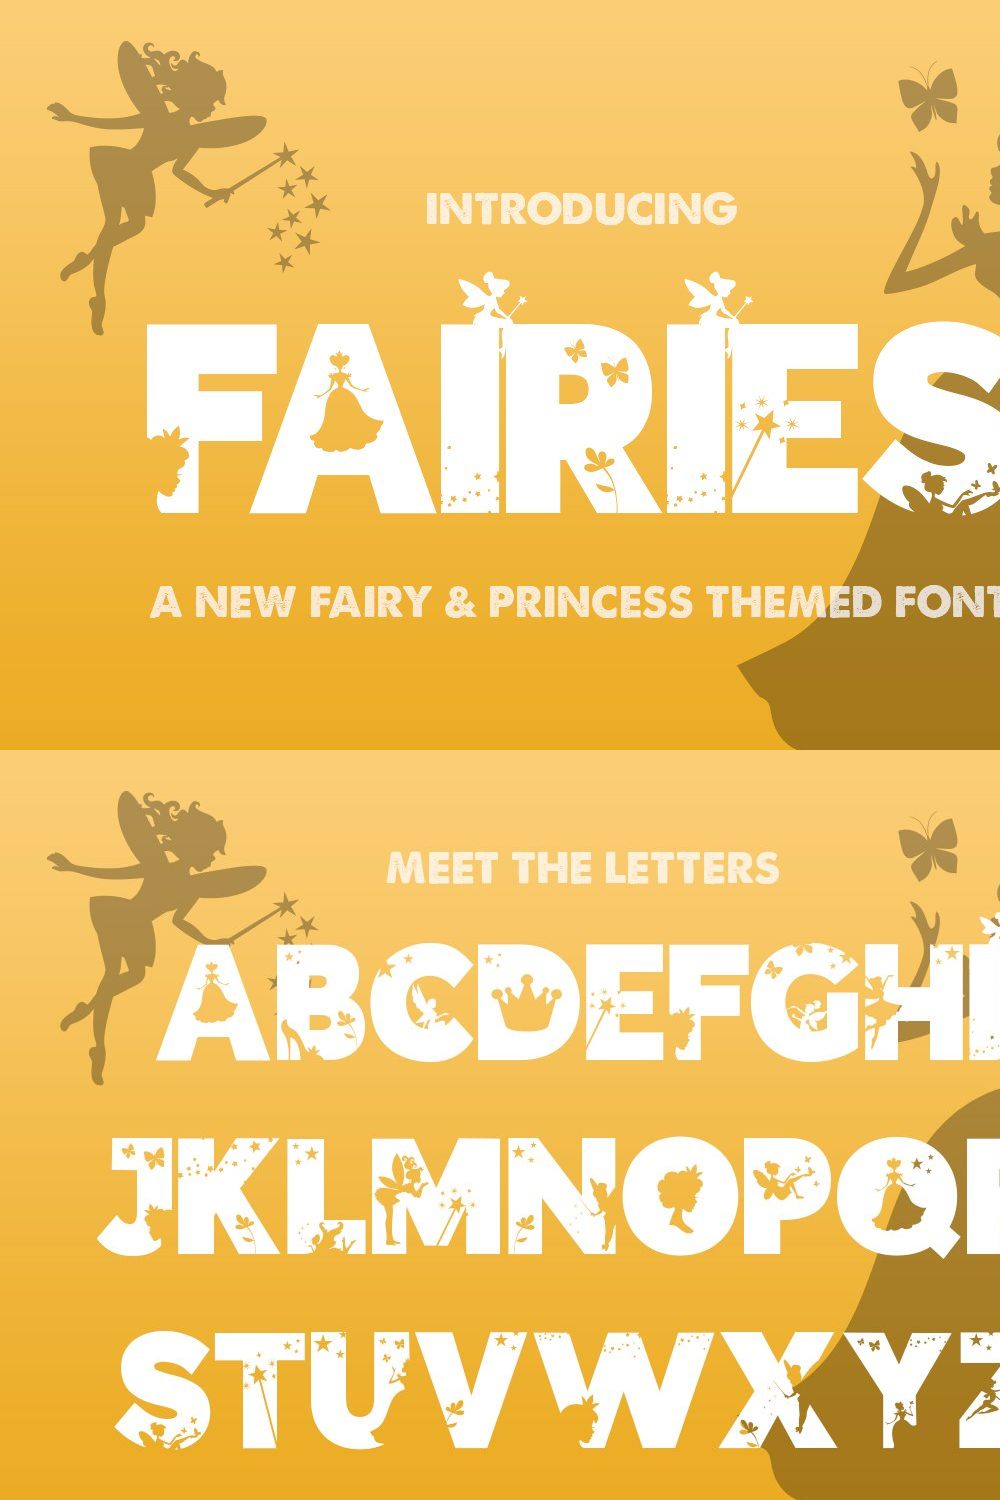 The Fairies Font pinterest preview image.